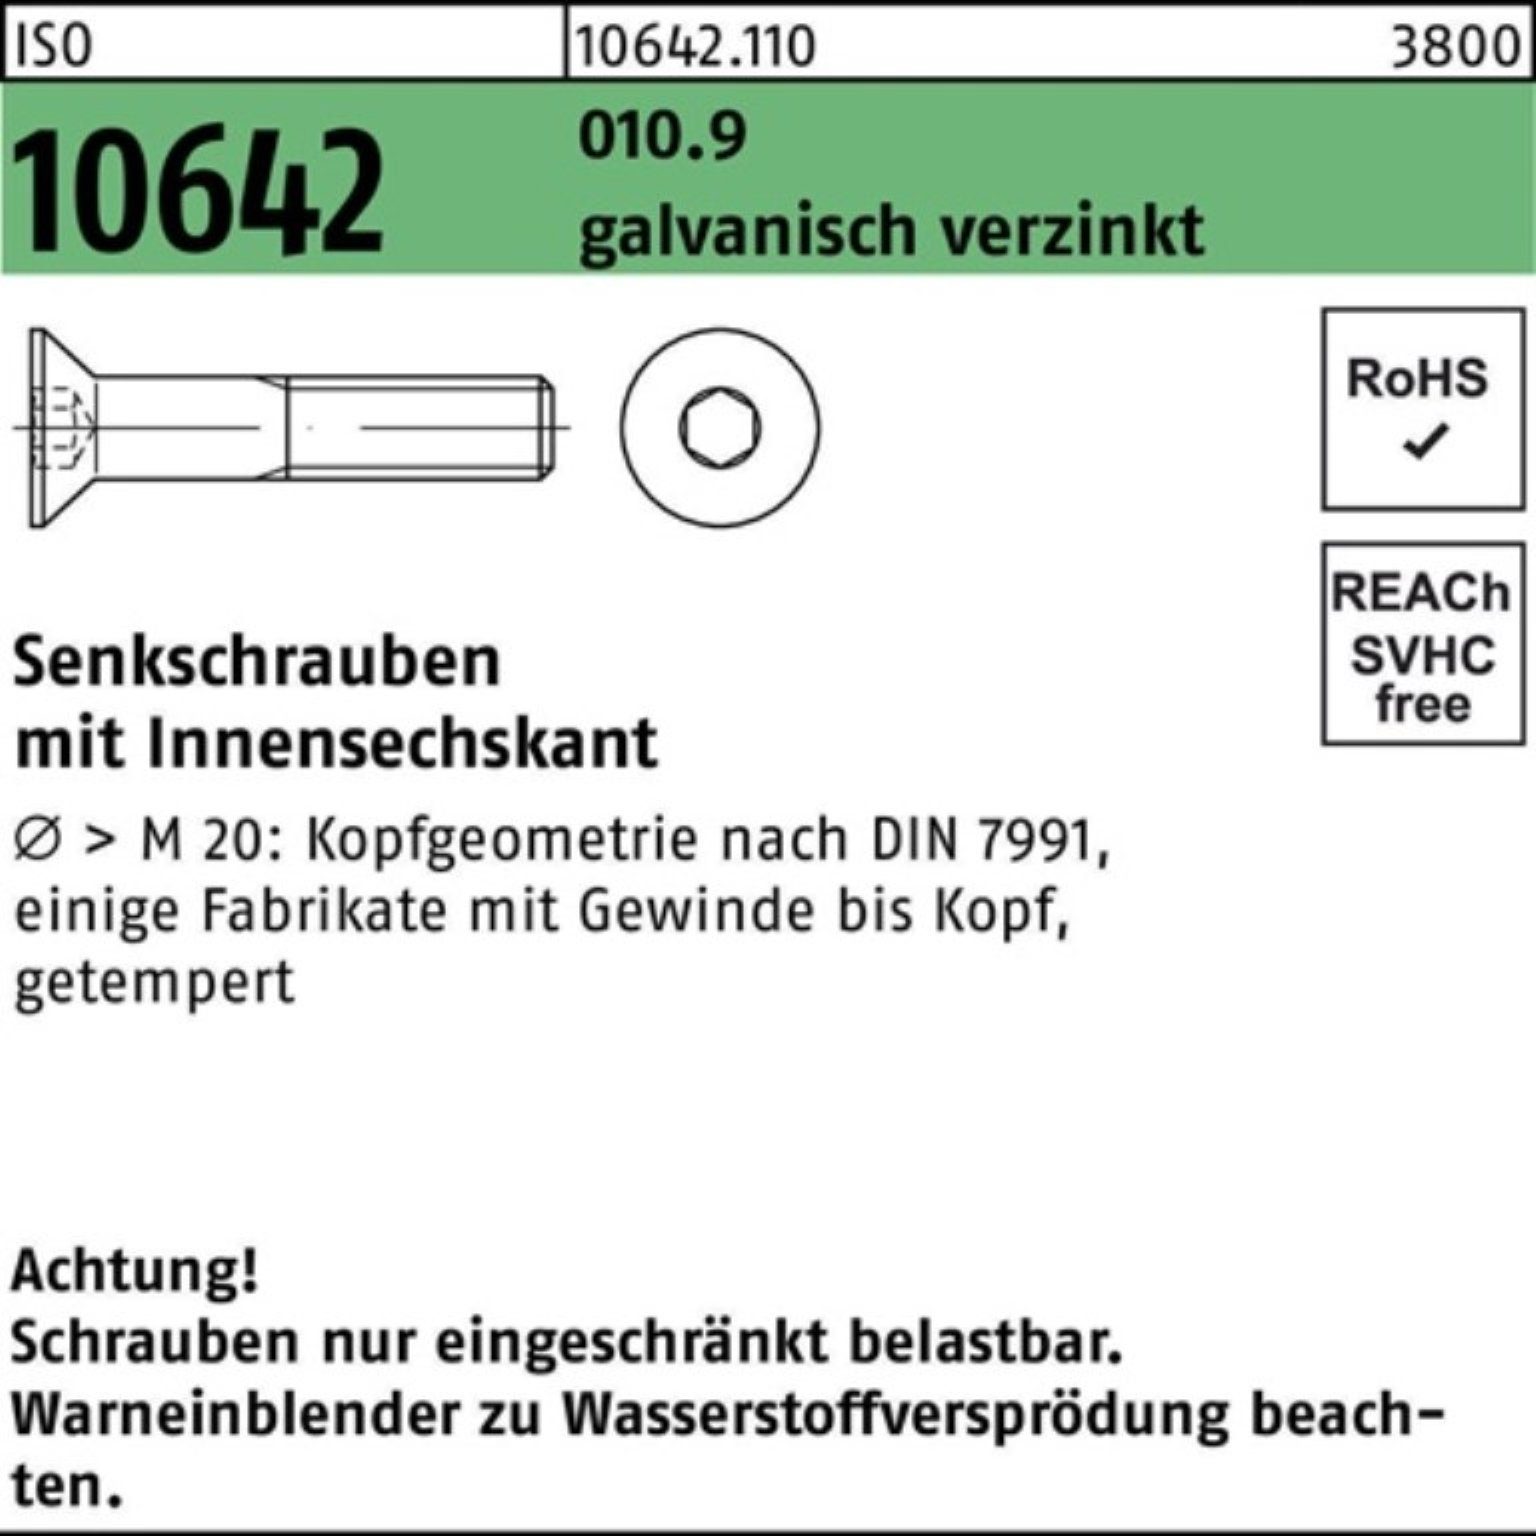 Reyher Senkschraube 200er Pack Senkschraube ISO 10642 Innen-6kt M8x 18 010.9 galv.verz. 20